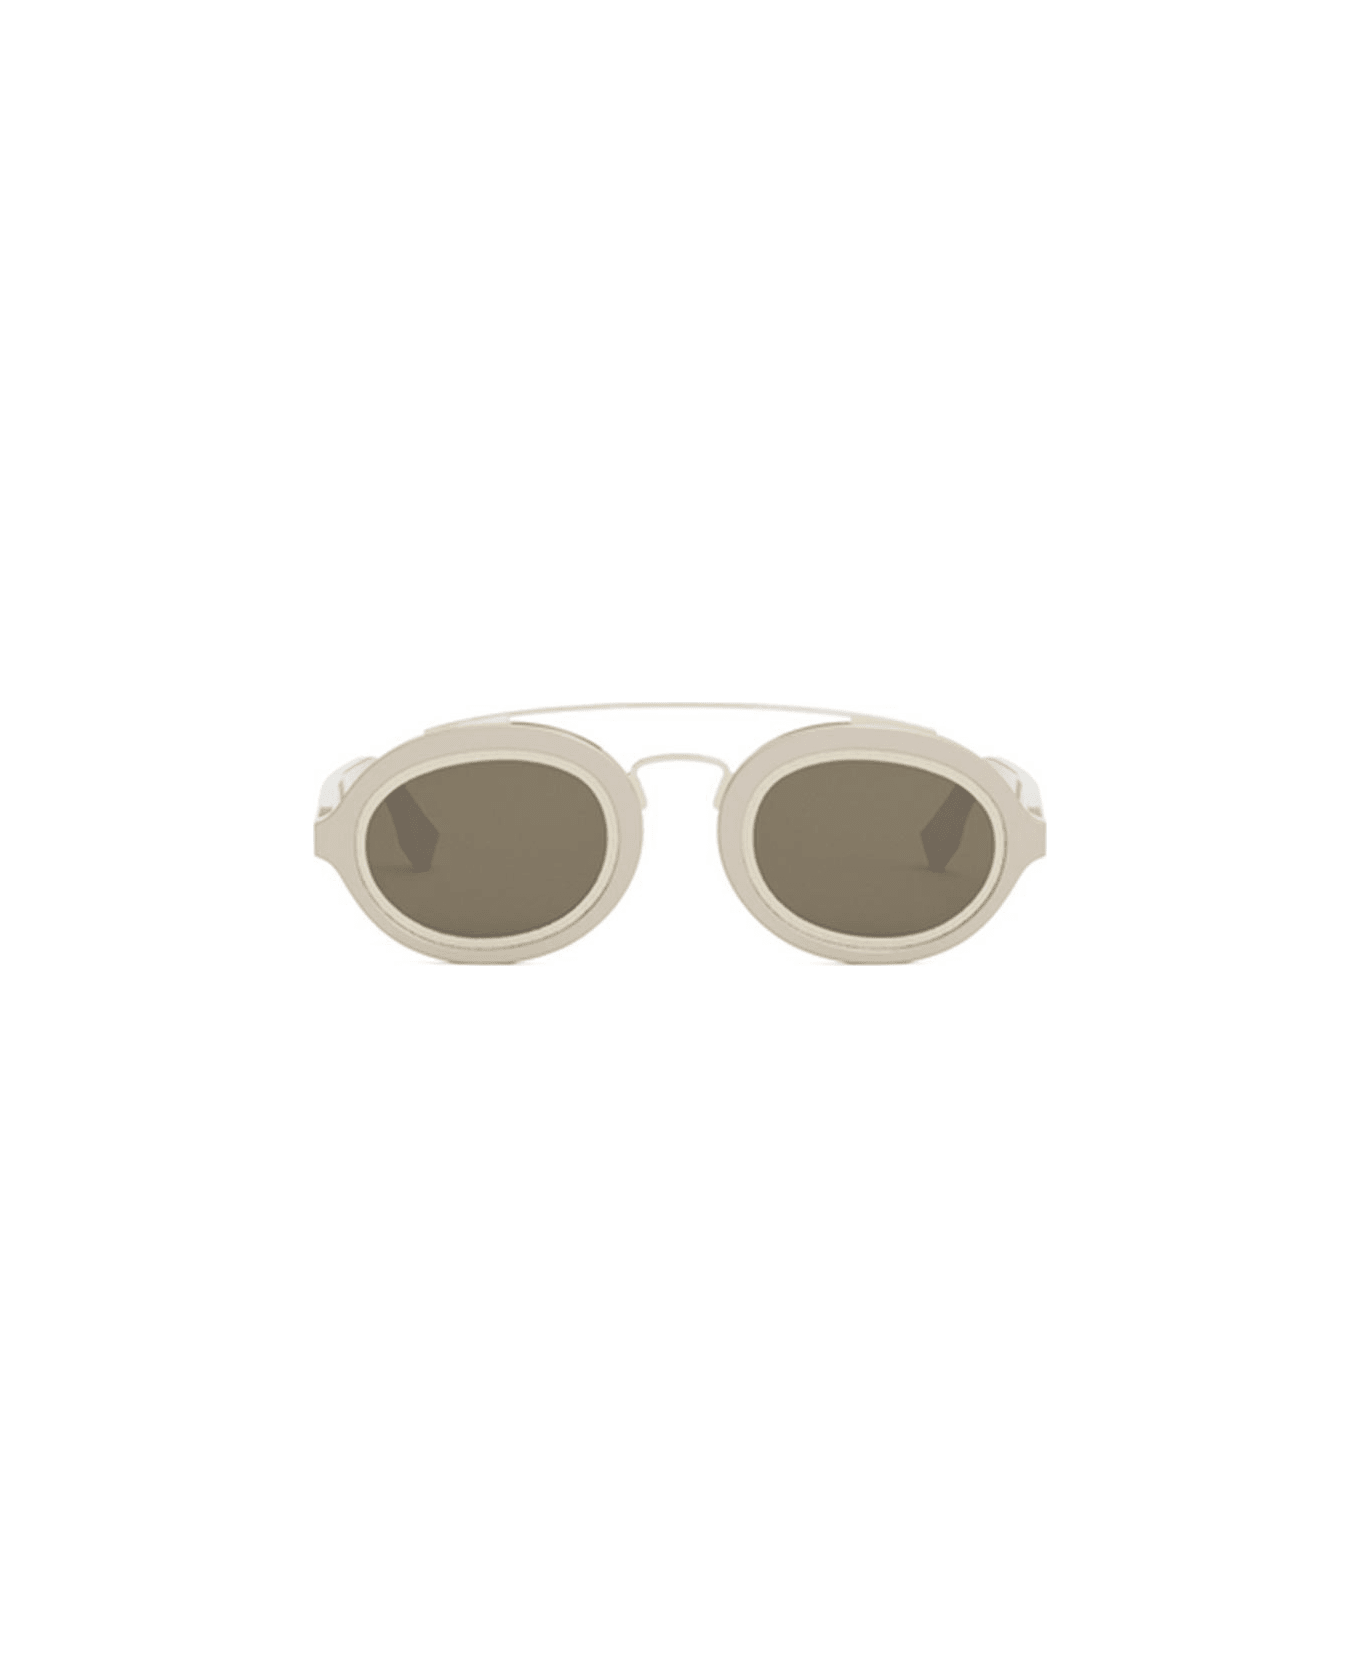 Fendi Eyewear Sunglasses - Avorio/Marrone